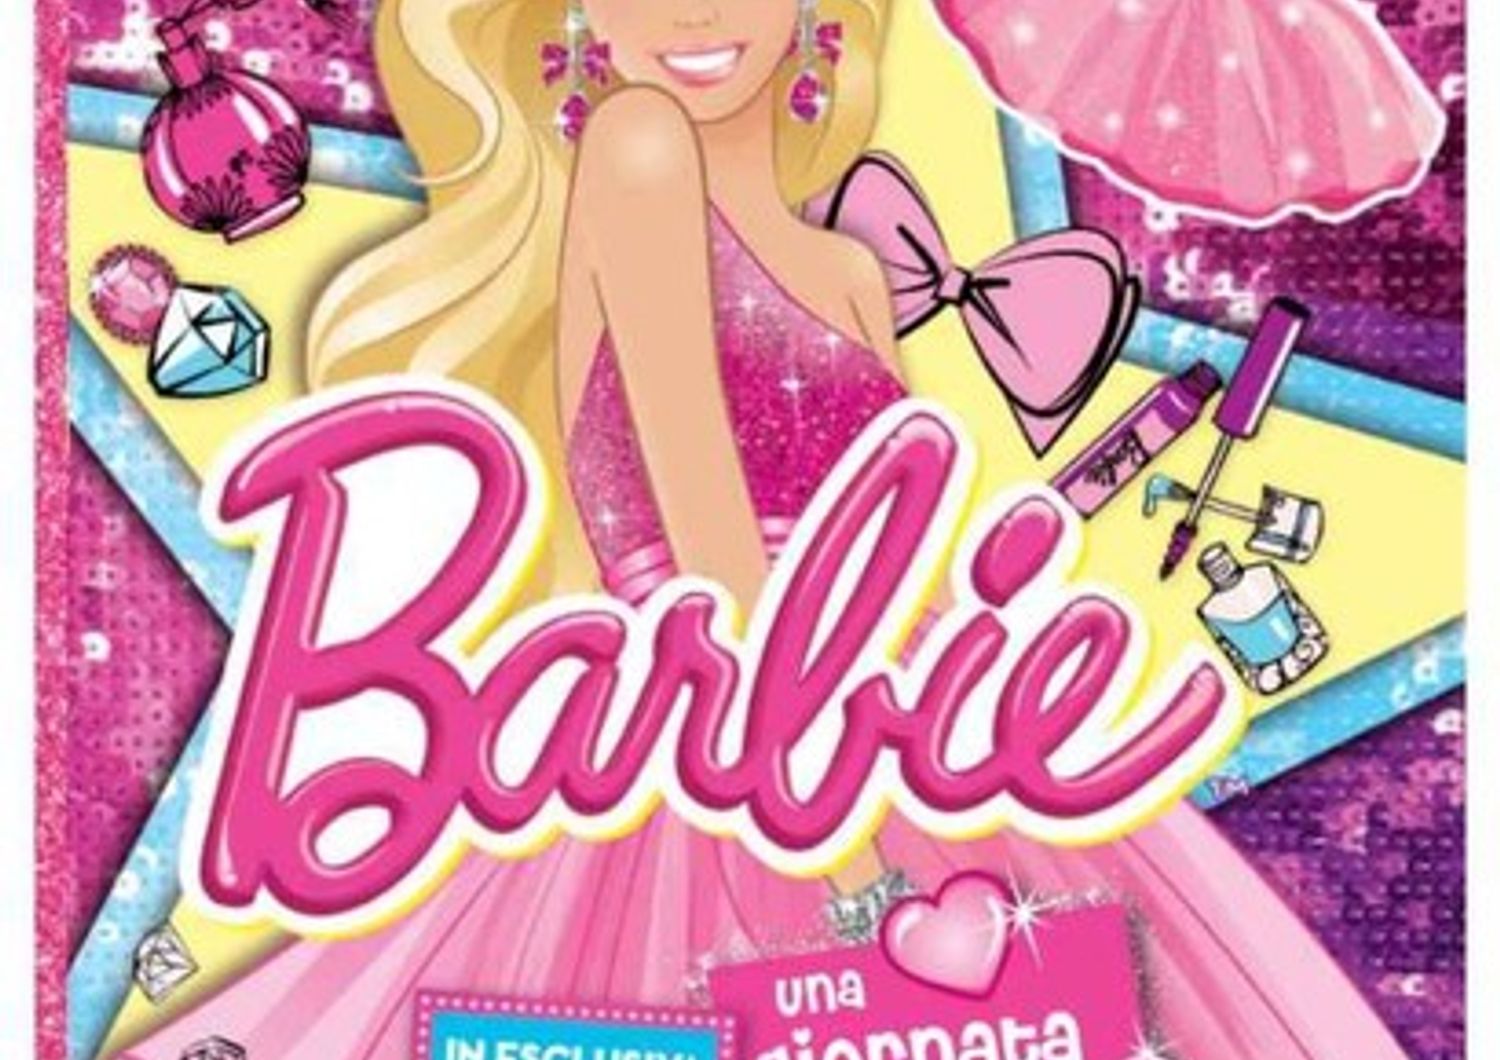 Esce in edicola l'album di figurine su "Barbie"